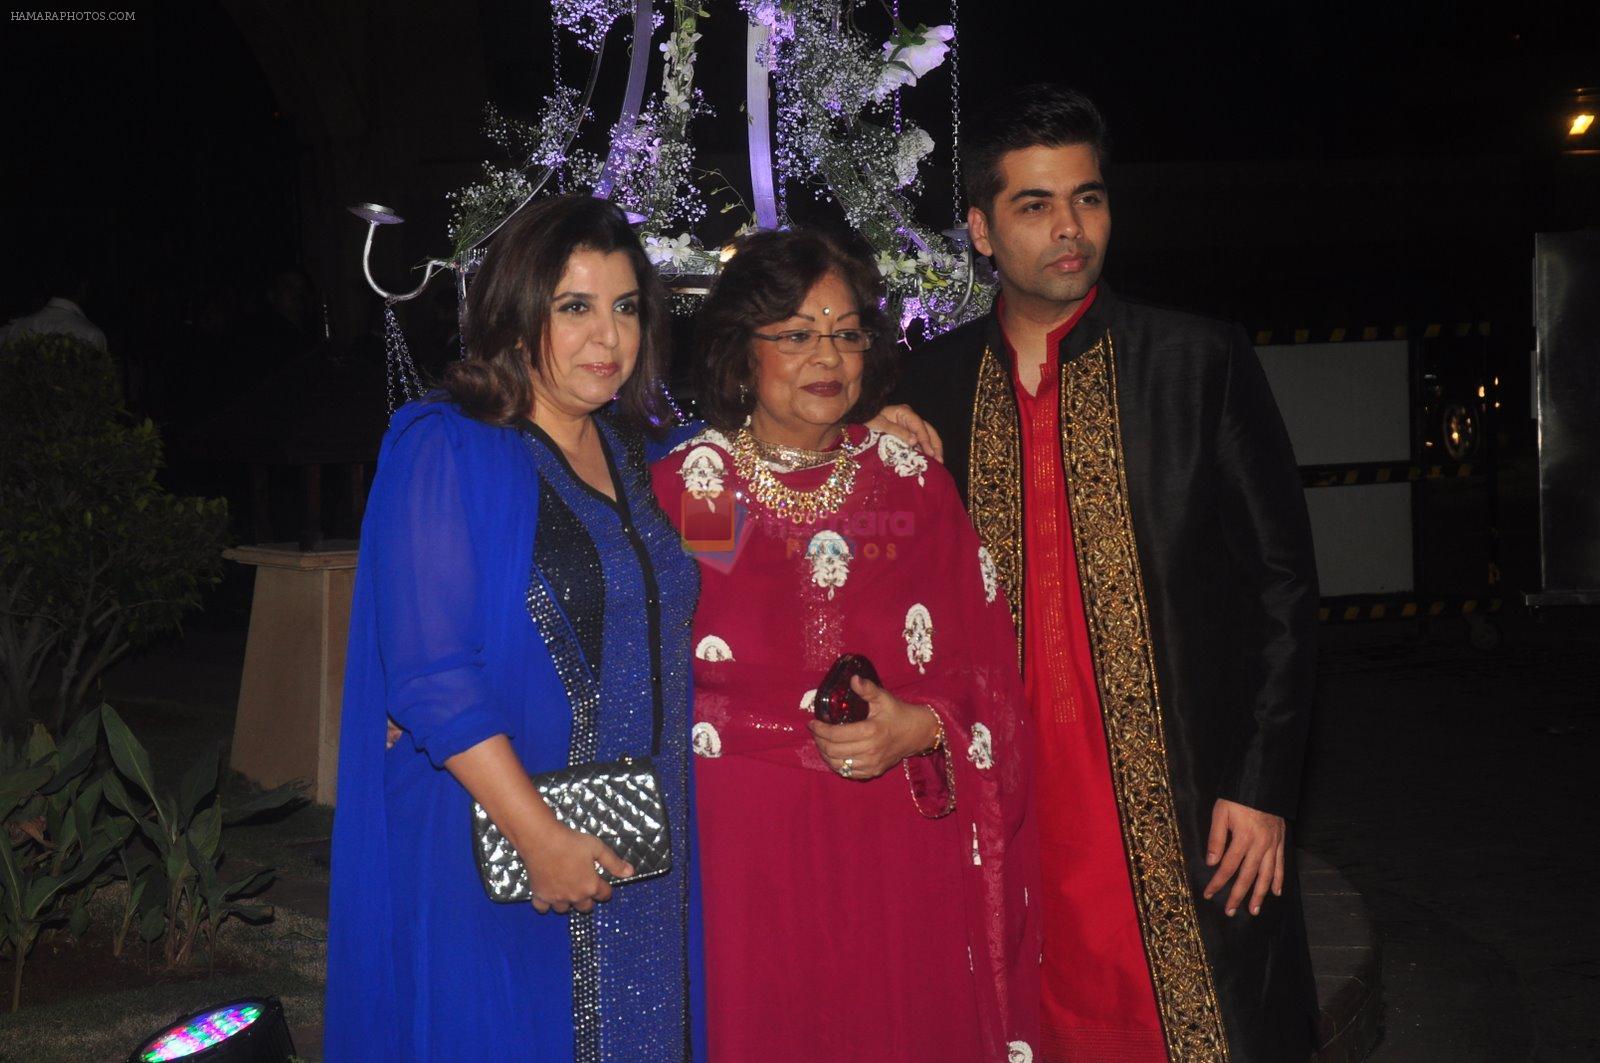 Farah Khan, Karan Johar at Sangeet ceremony of Riddhi Malhotra and Tejas Talwalkar in J W Marriott, Mumbai on 13th Dec 2014